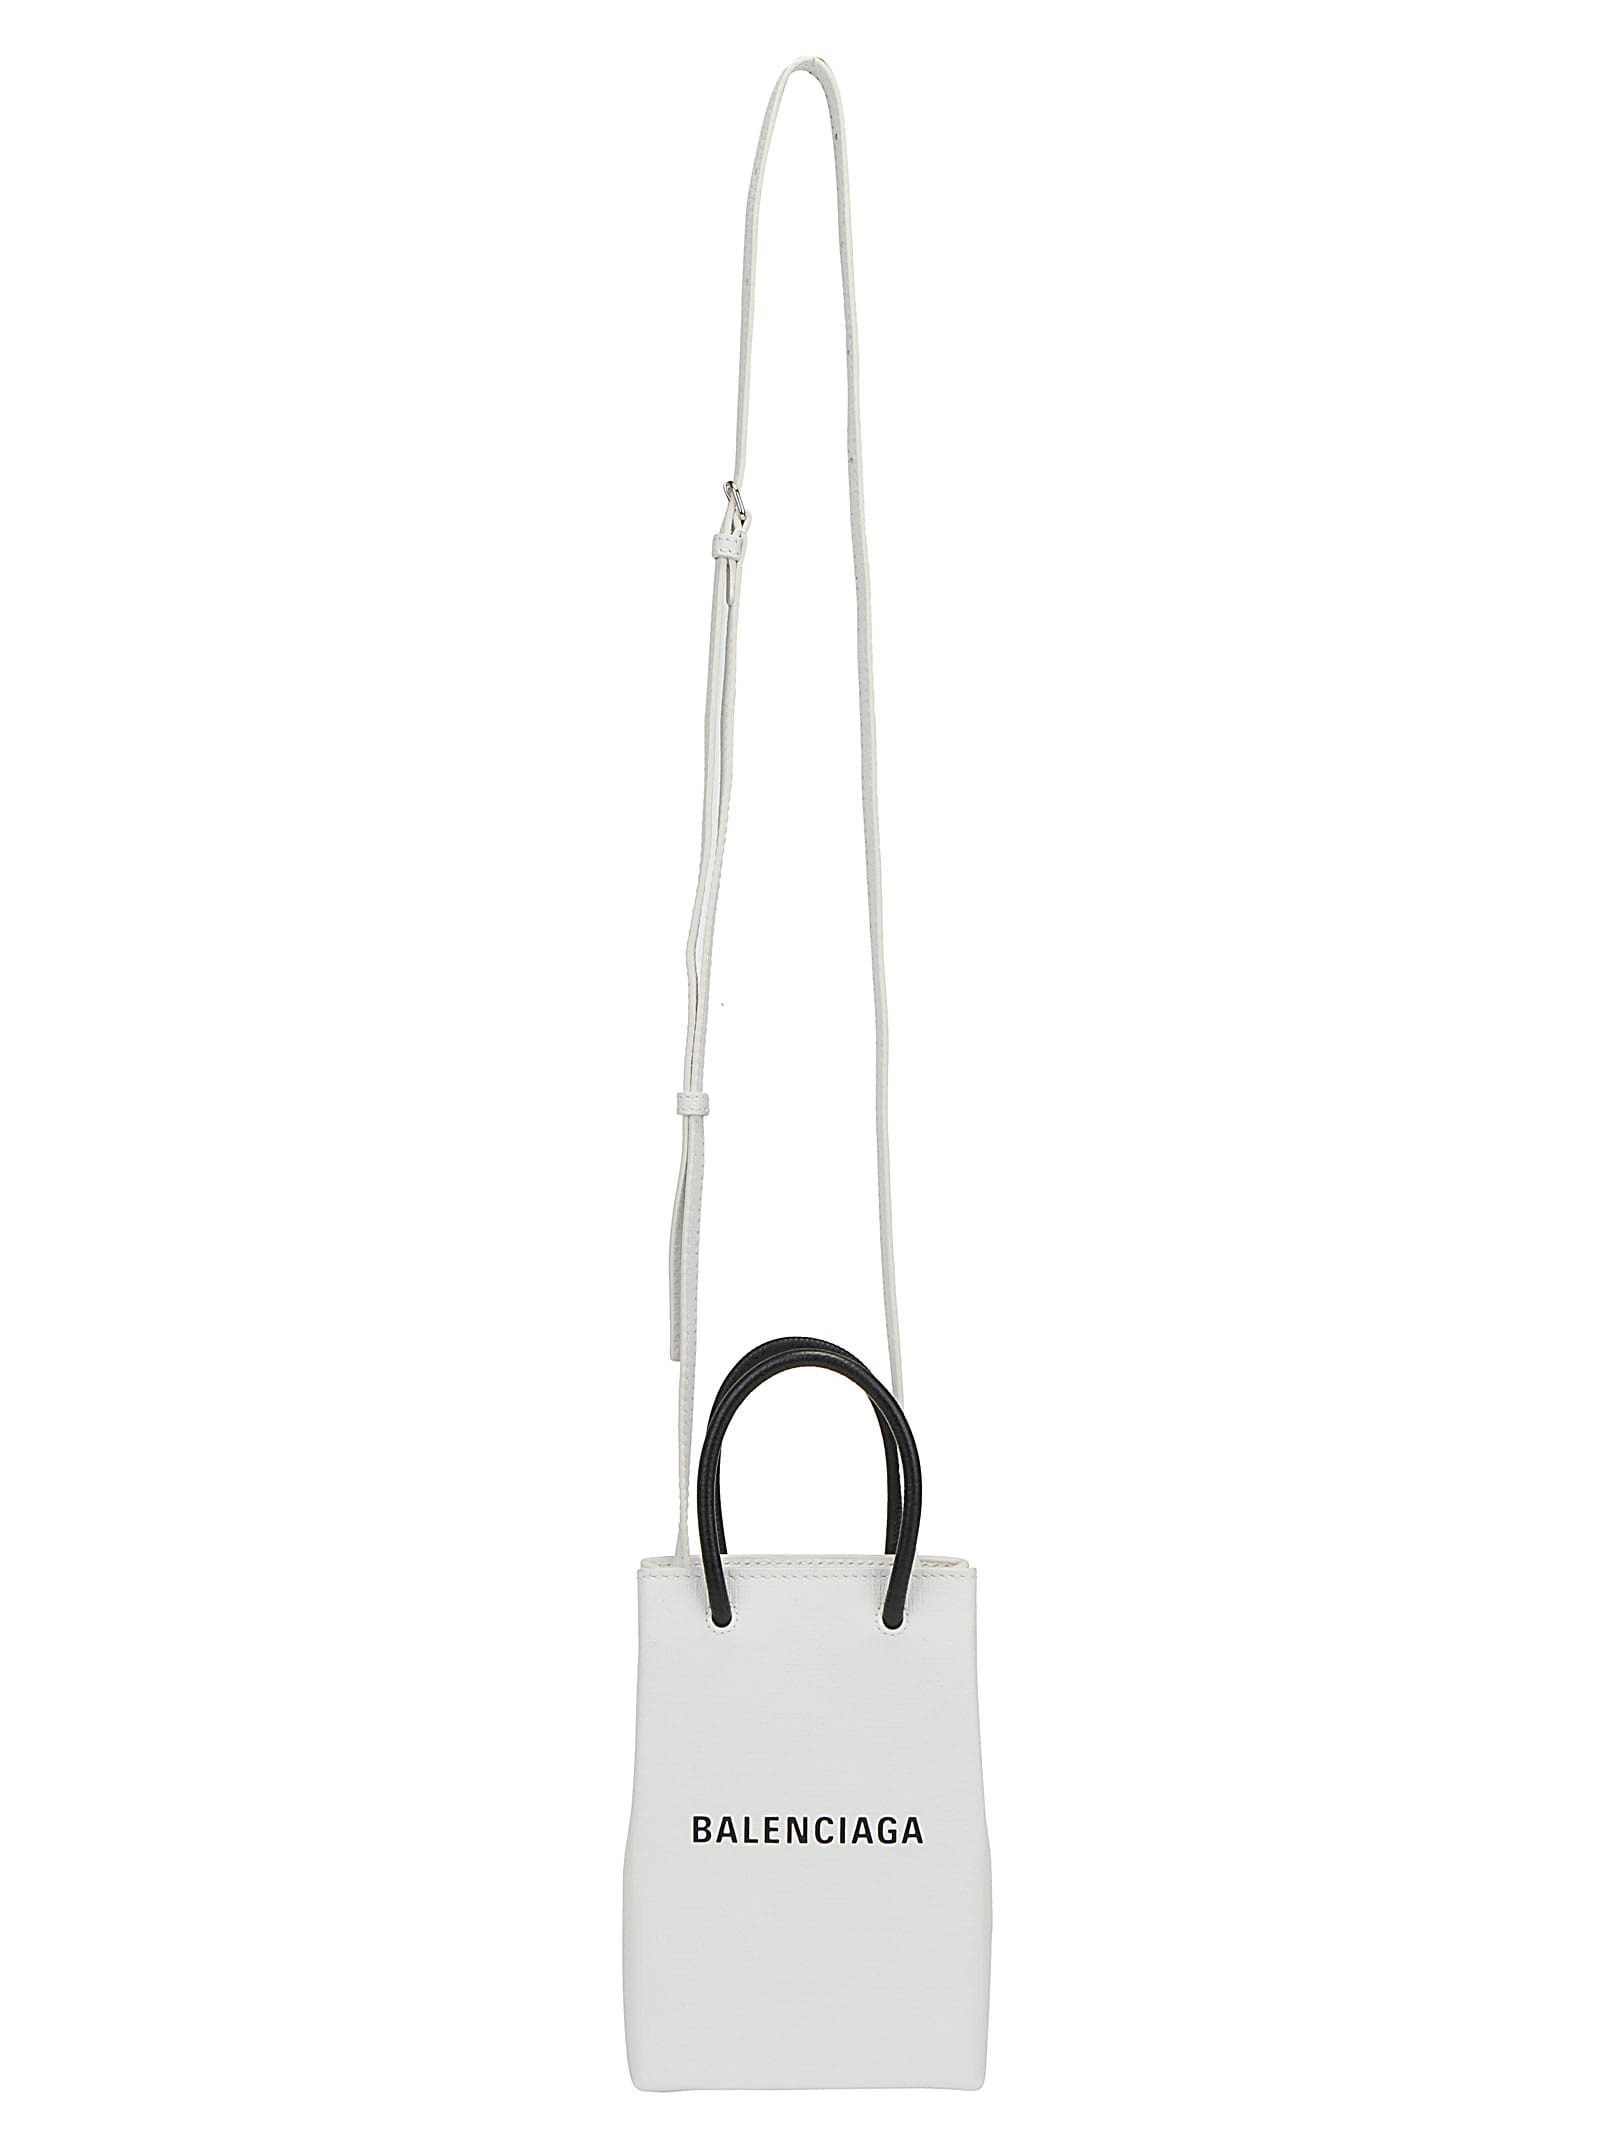 Balenciaga Shopping Phone Holder Croceffect Leather Bag  Womens  Black   Street style bags Balenciaga shopping bag Modest outfits